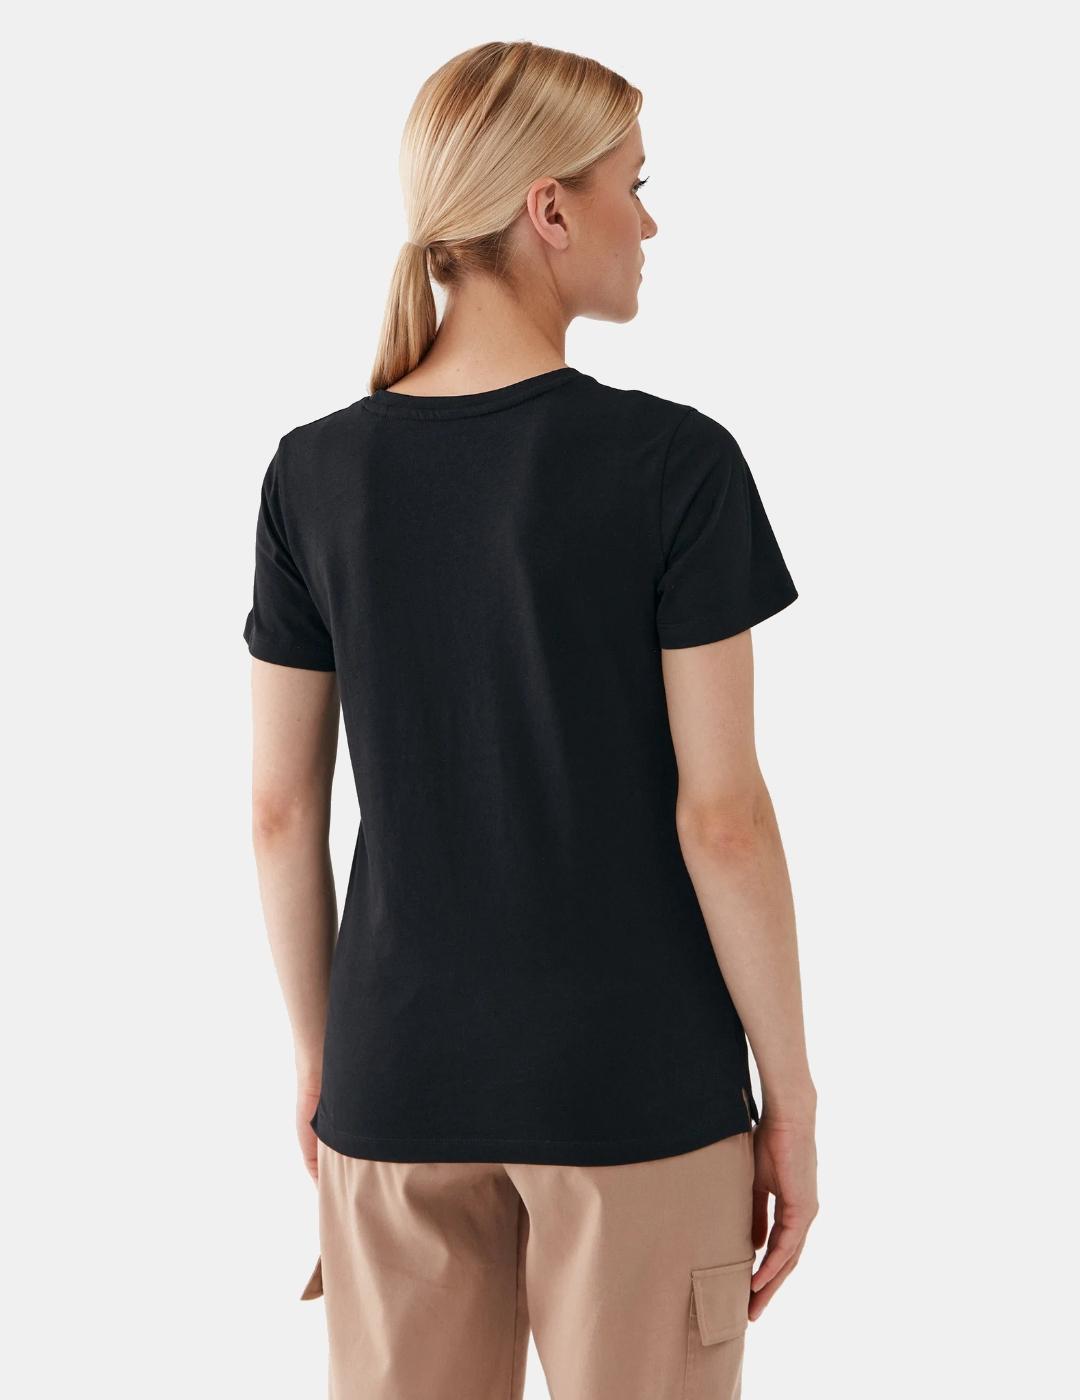 Camiseta Guess Animal negro para mujer